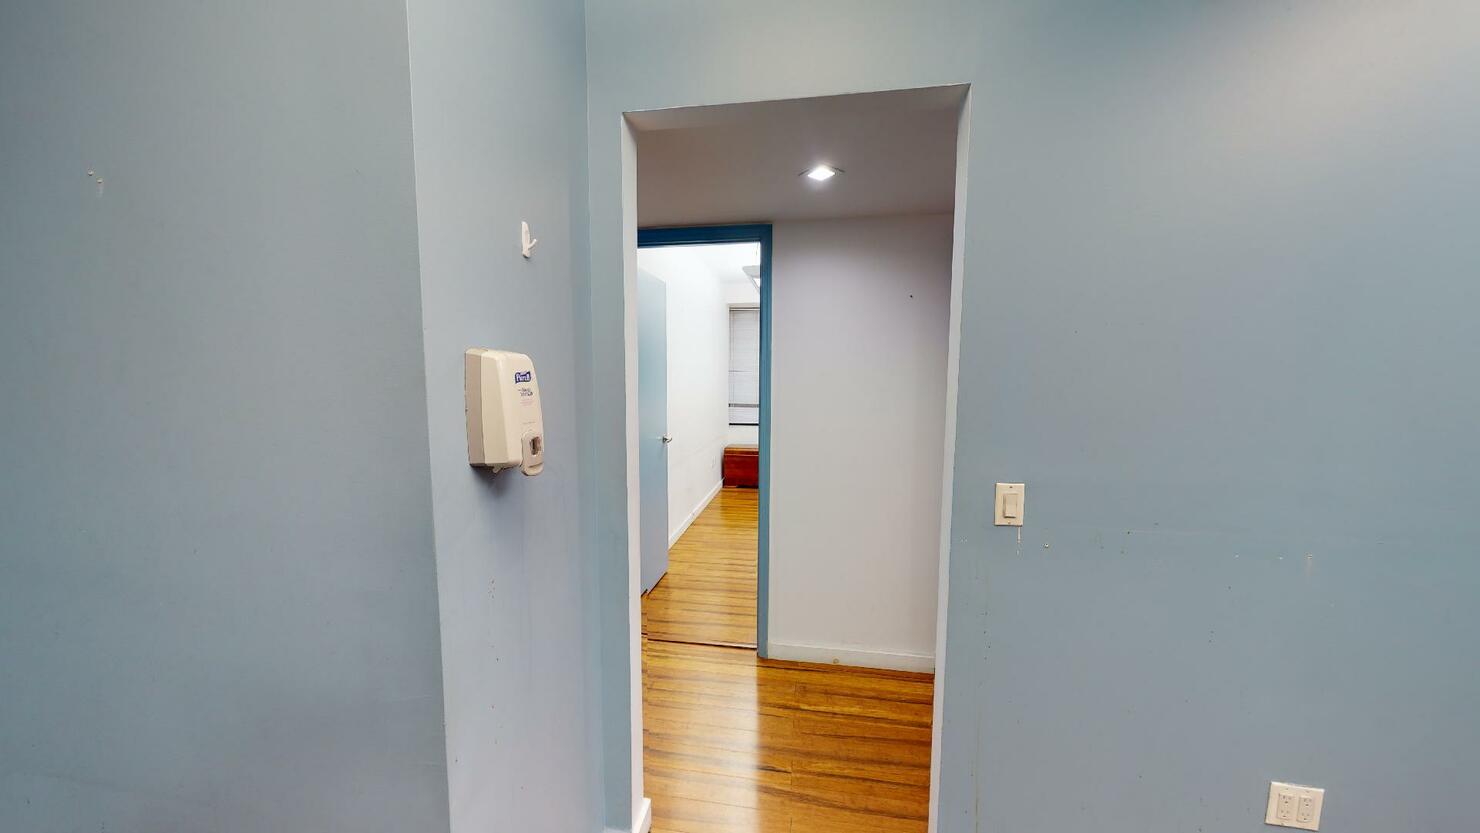 369 Lexington Avenue Office Space, #8B - Light Blue Walls and Hardwood Floor